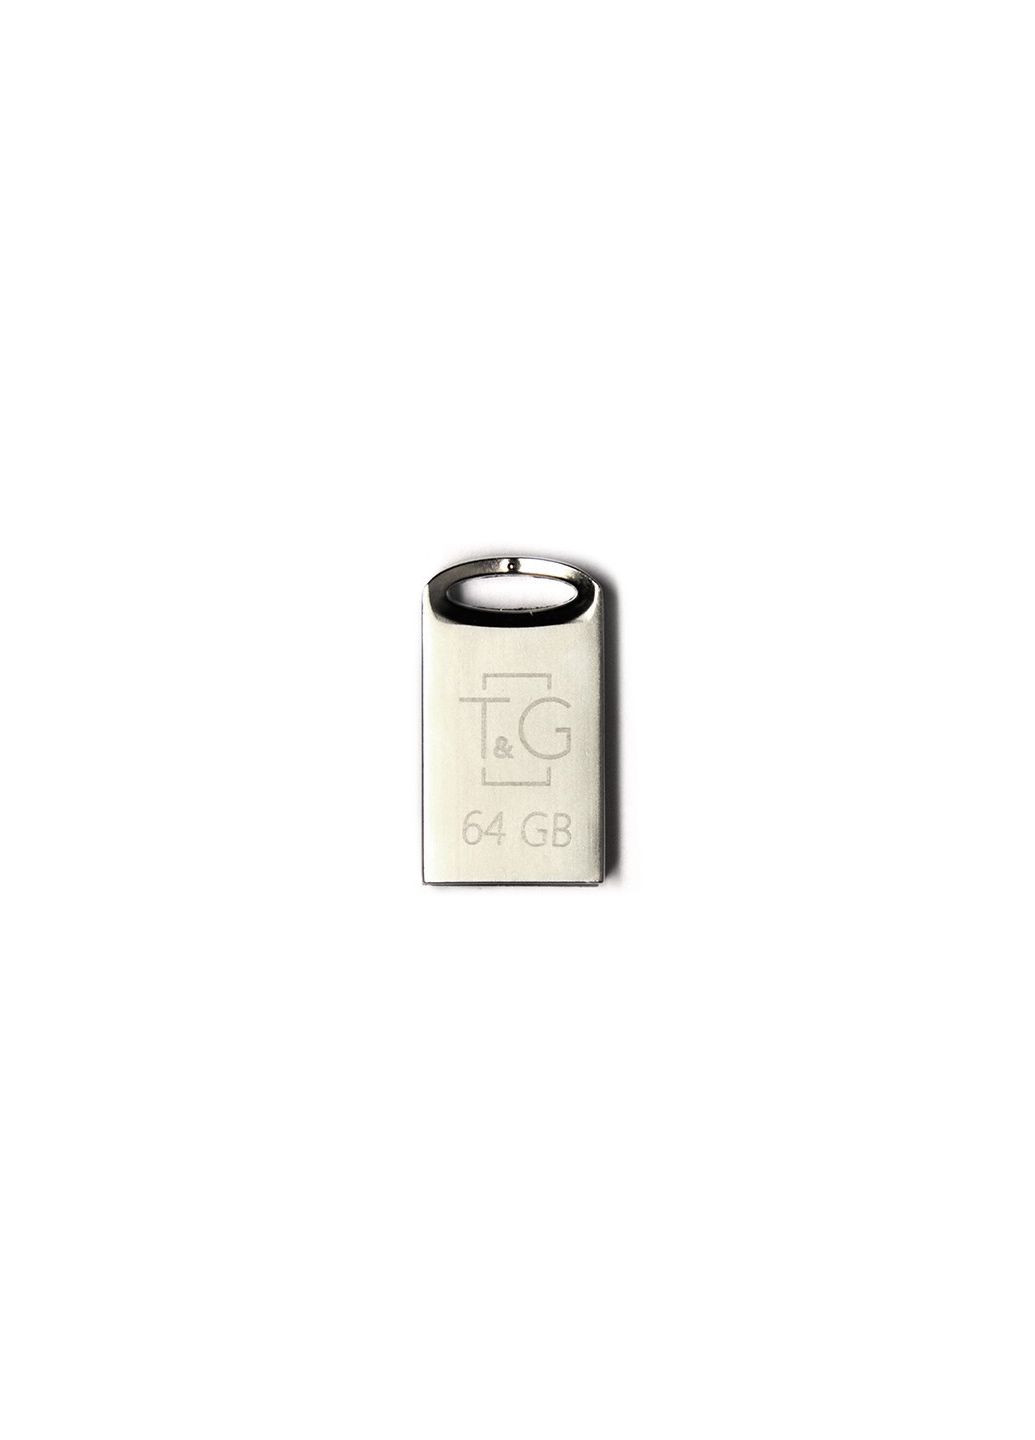 Флешка металева недорога Metal mini design (model 105) USB 64GB T&G (279554998)